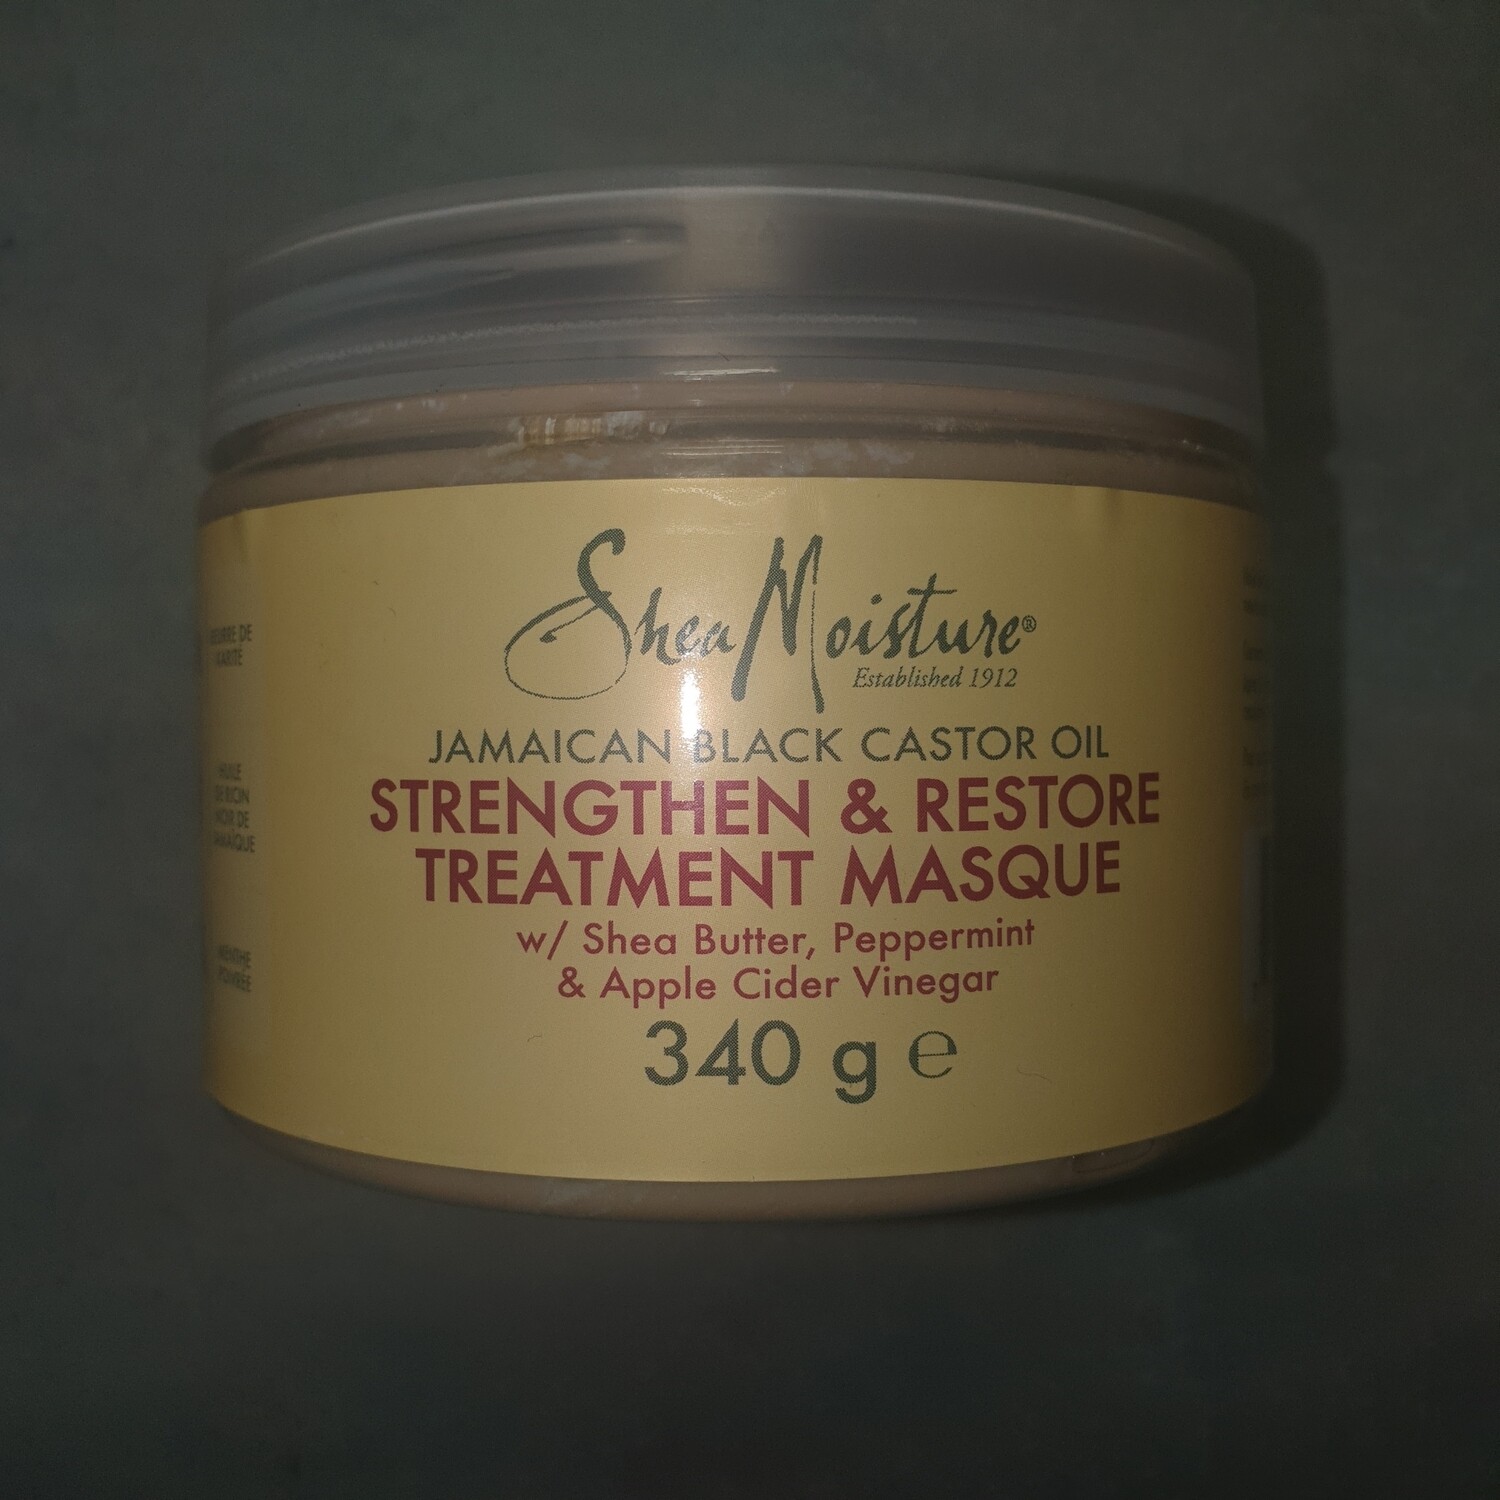 Shea Moisture - Jamaican Black Castor Oil - Strengthen & Restore Treatment Masque